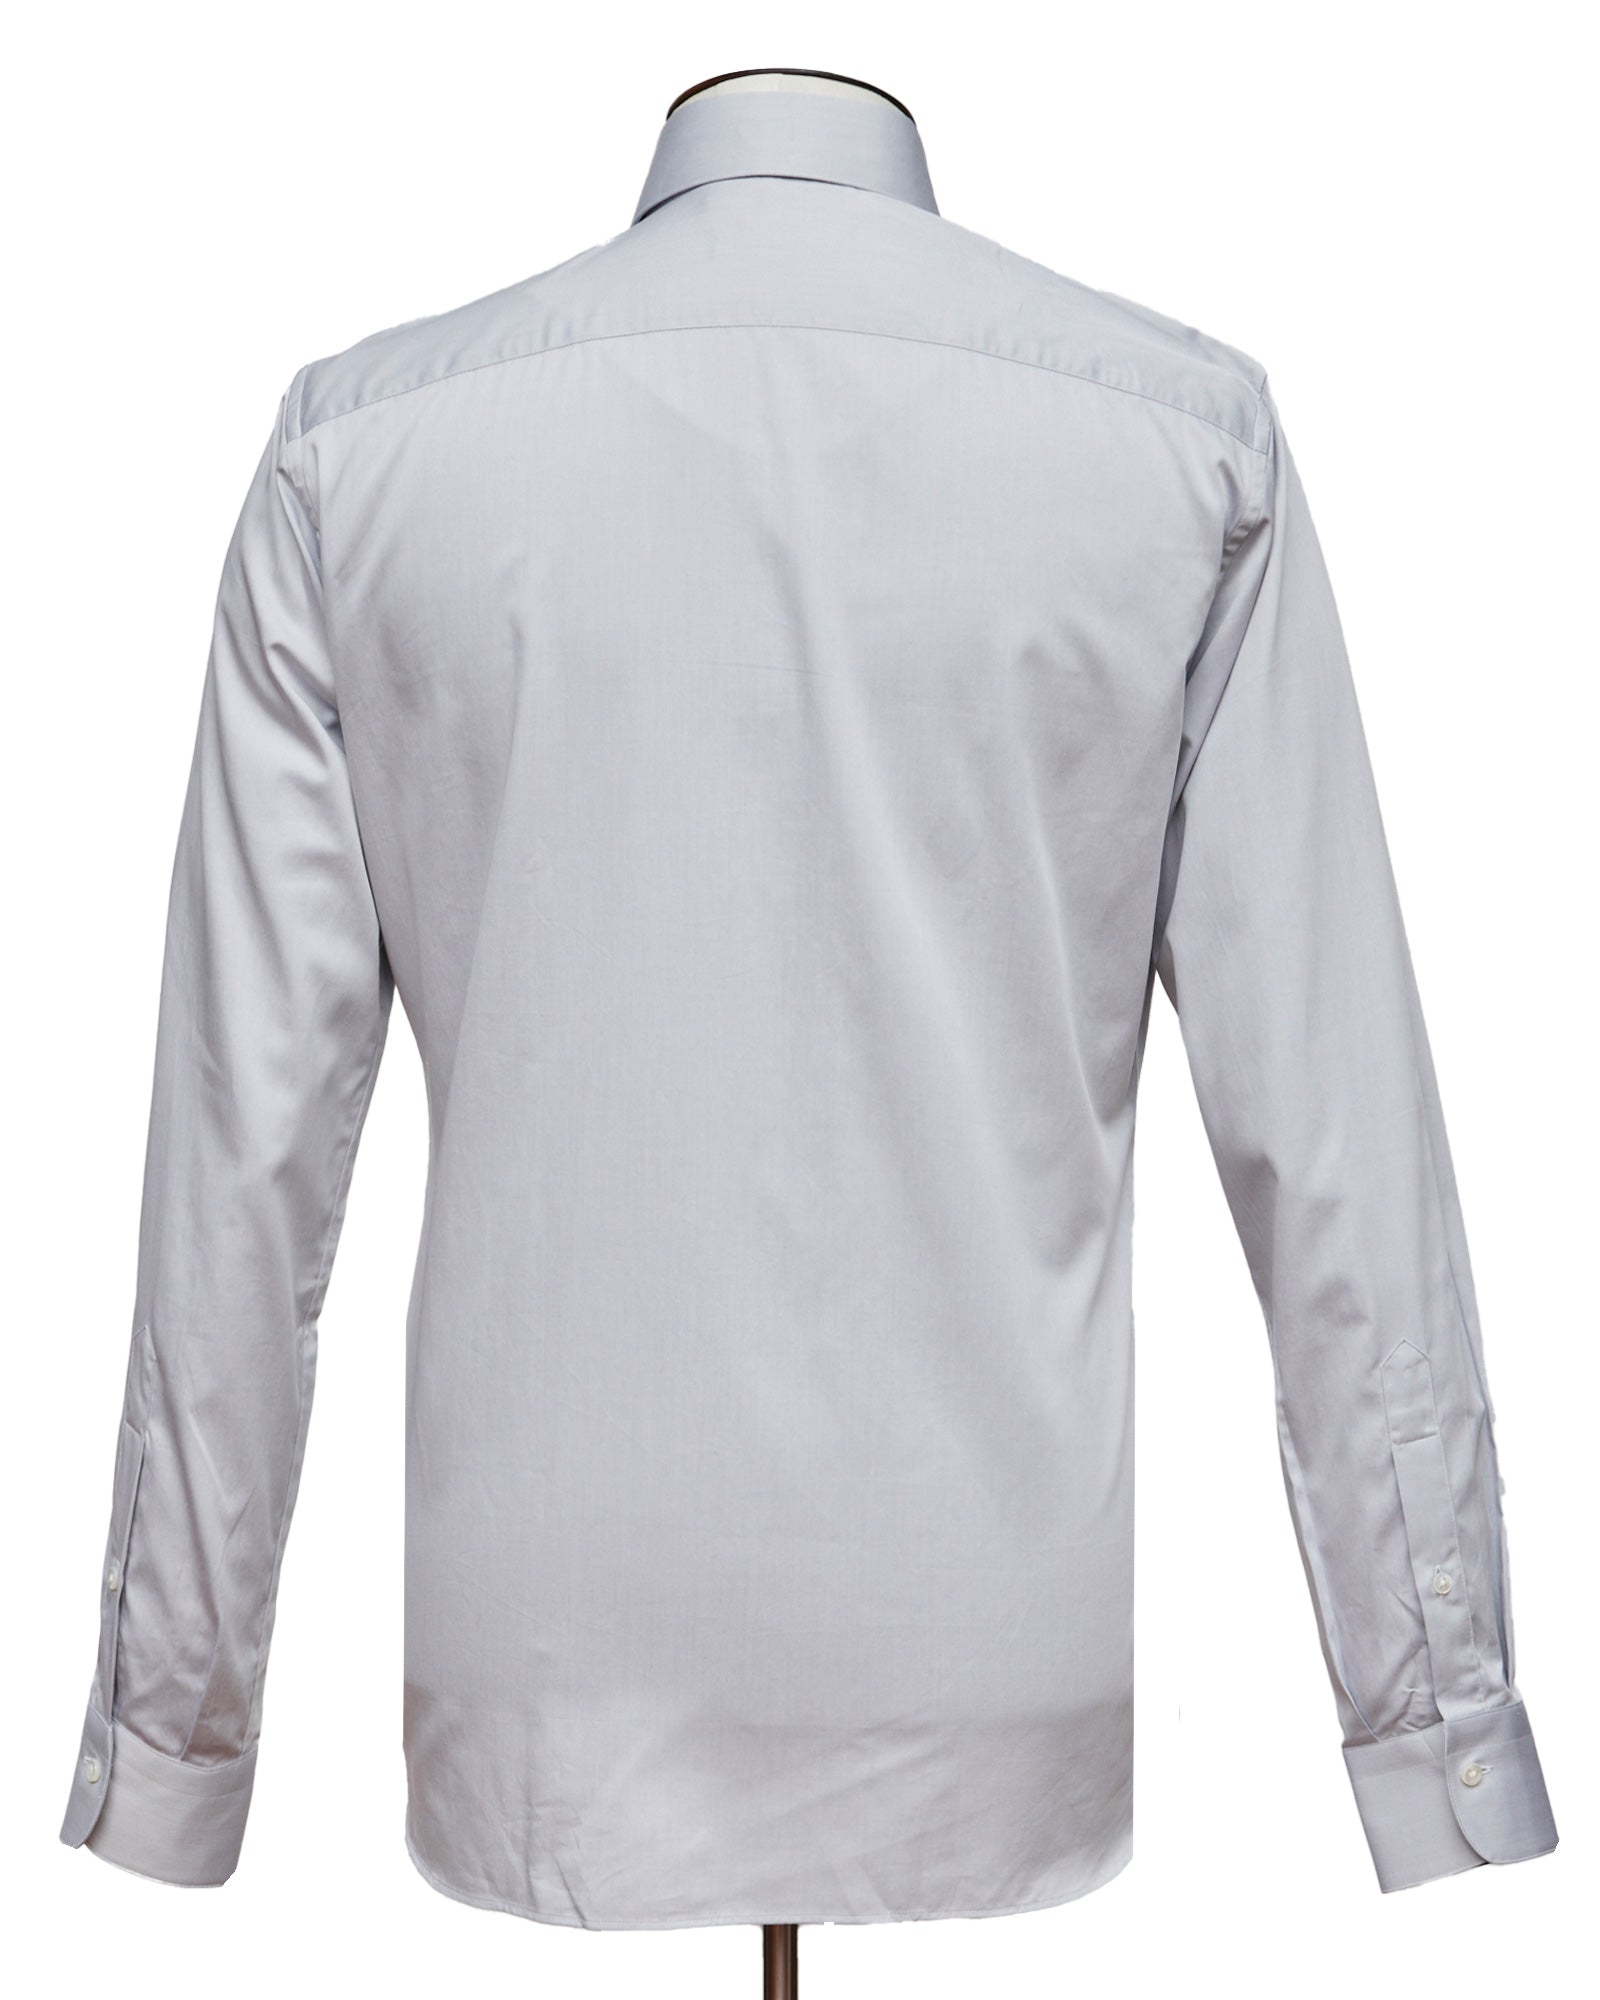 Cutaway Collar Shirt - Dove Cotton Sateen